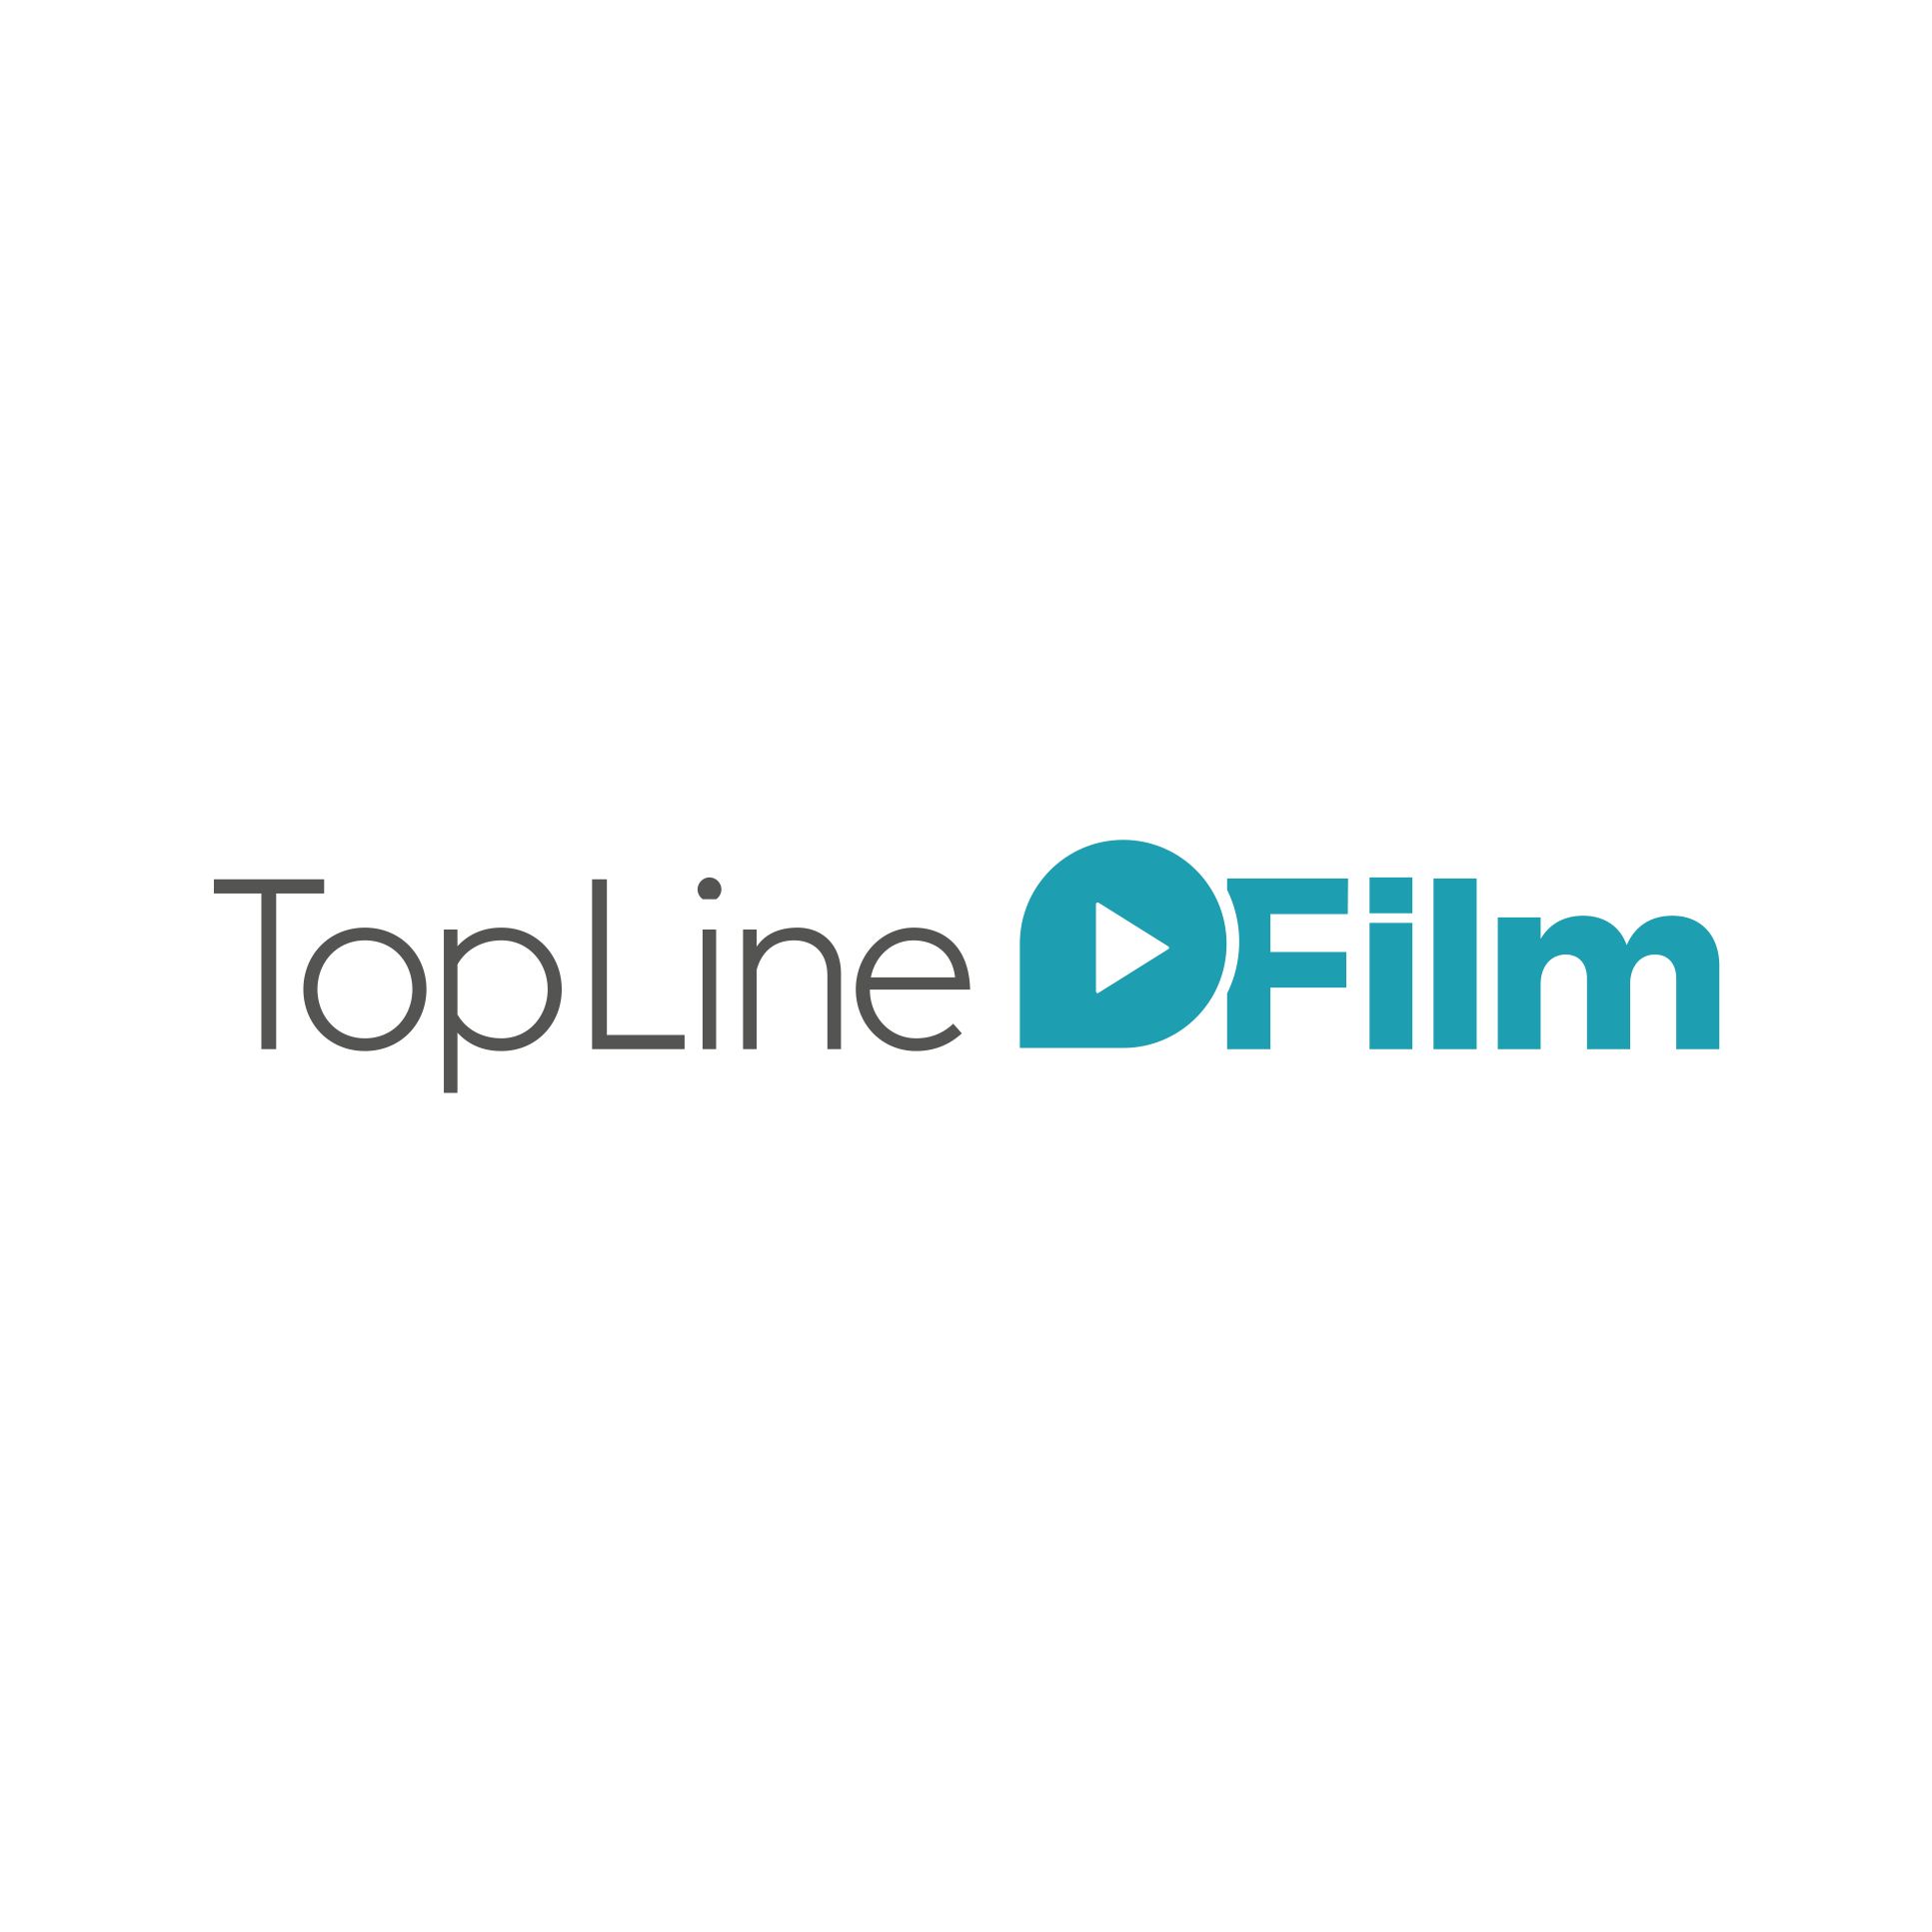 Логотип TopLine Film